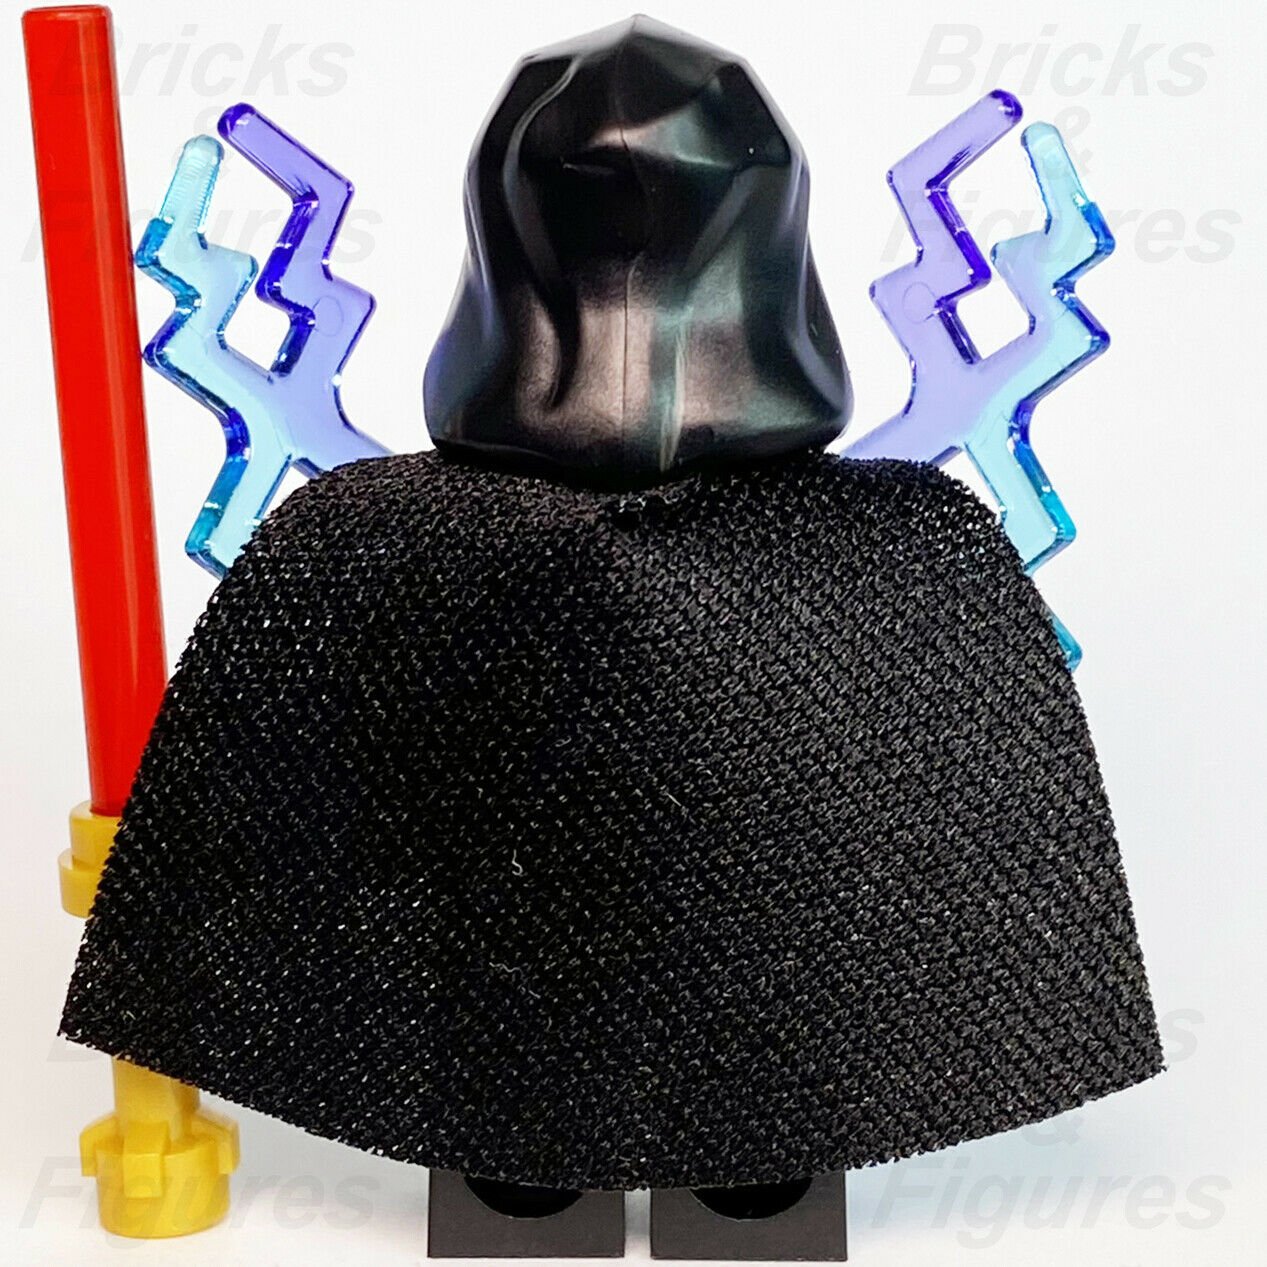 Star Wars LEGO Emperor Palpatine Darth Sidious Minifigure 75291 912169 sw1107 - Bricks & Figures